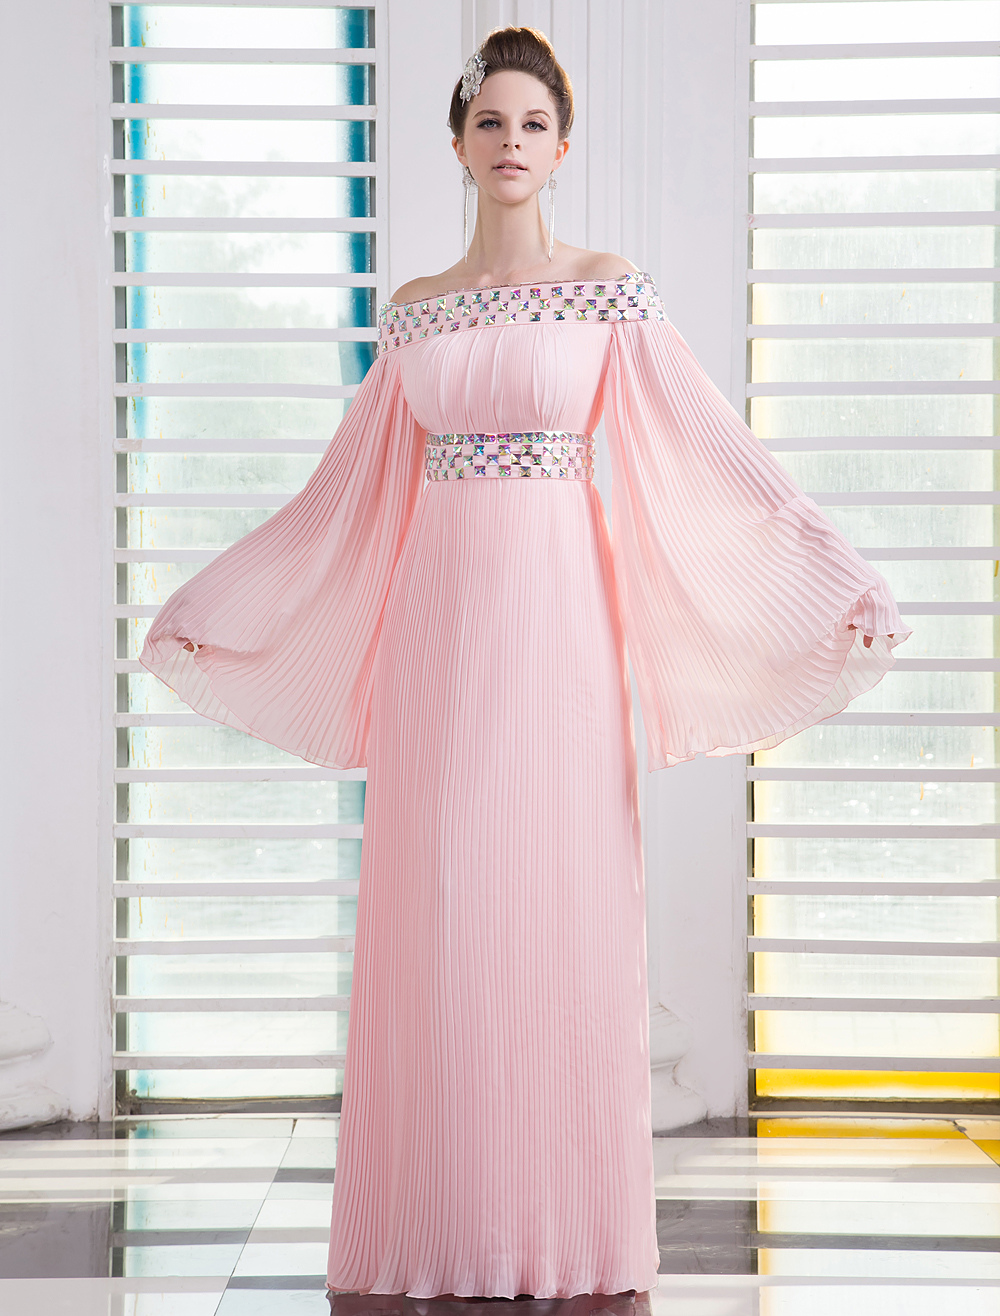 Pink Bateau Neck Long Sleeves Rhinestone A-line Chiffon Prom Dress Milanoo (Wedding Prom Dresses) photo